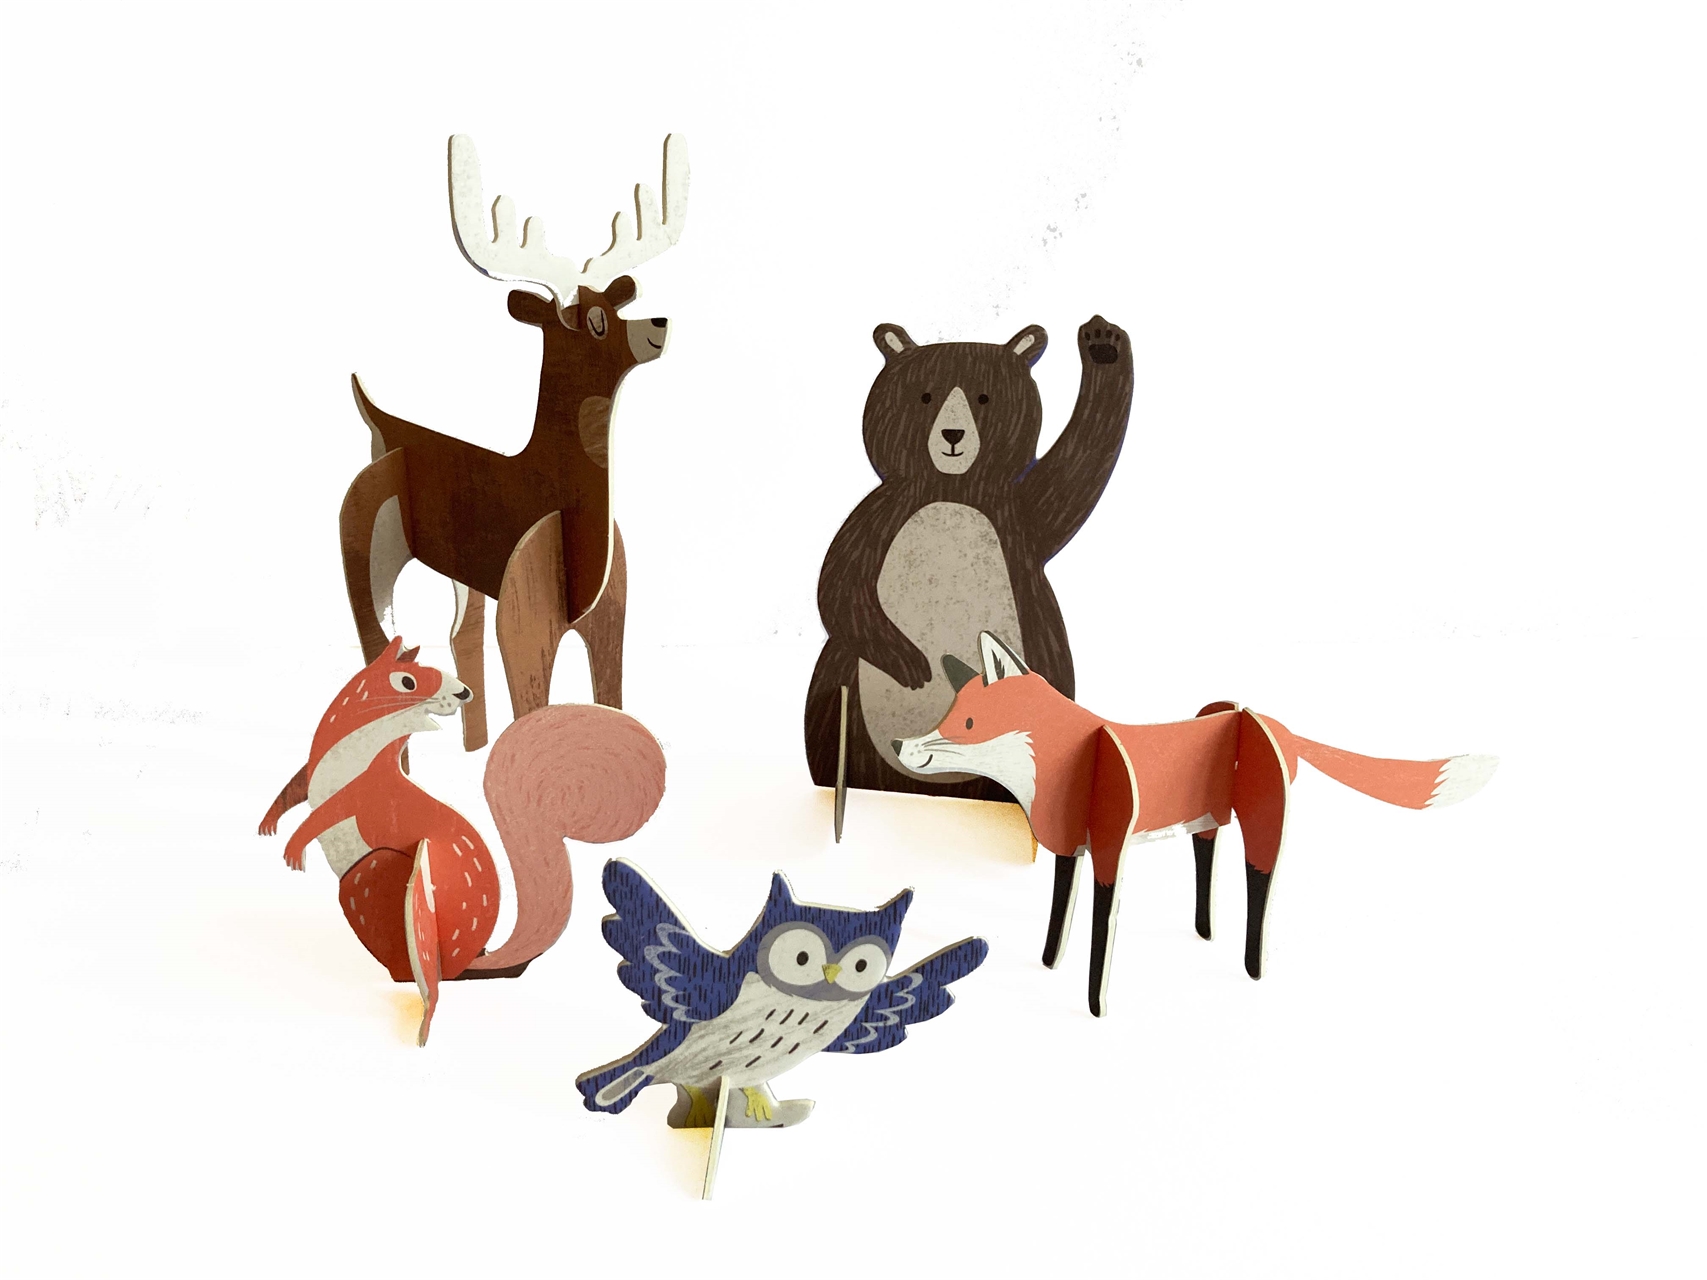 »Mein Spielspaß-Buch. Die Tiere feiern Geburtstag im Wald« — DORLING KINDERSLEY